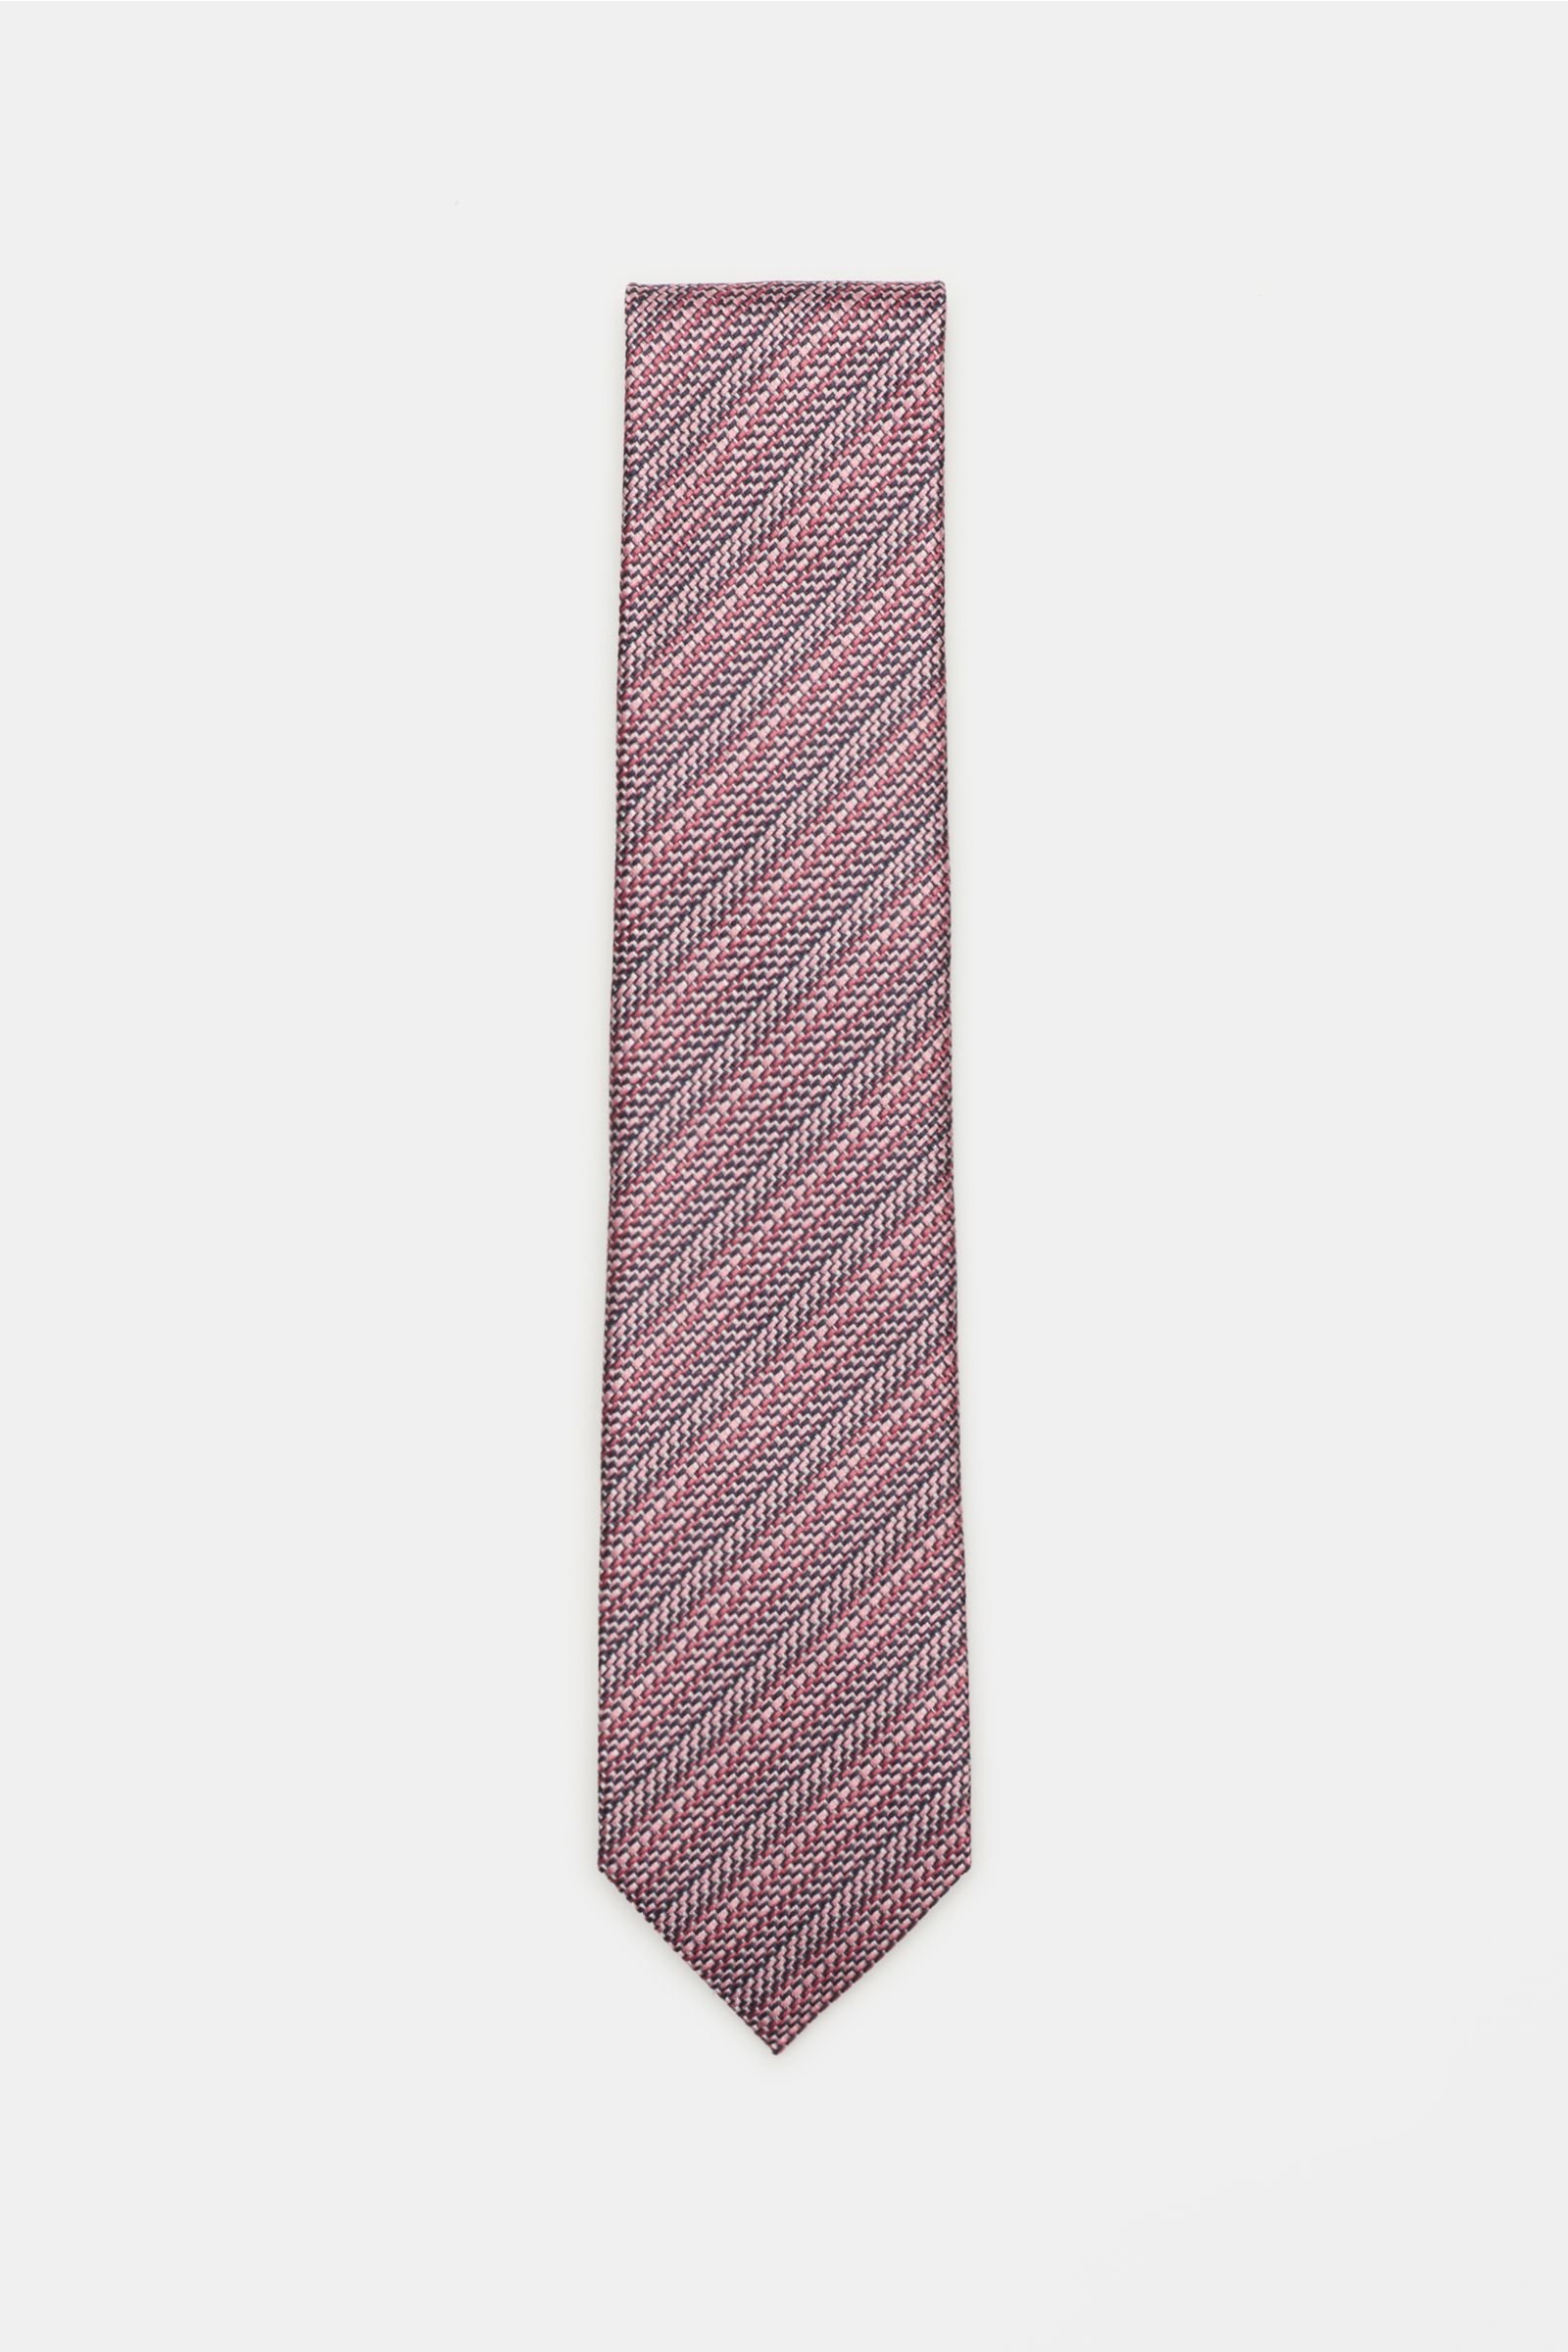 Silk tie antique pink patterned